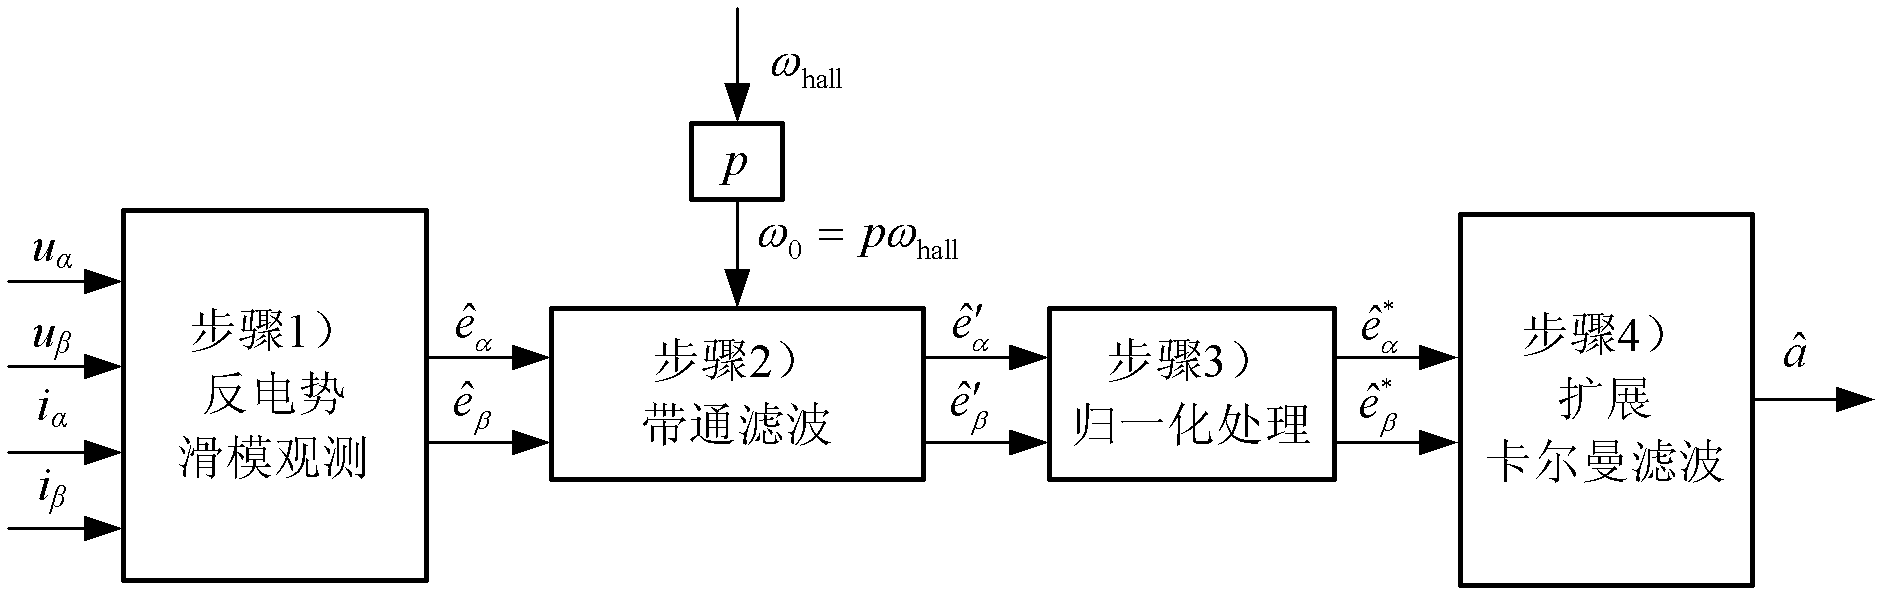 Method for estimating angular acceleration of permanent magnet brushless direct-current motor